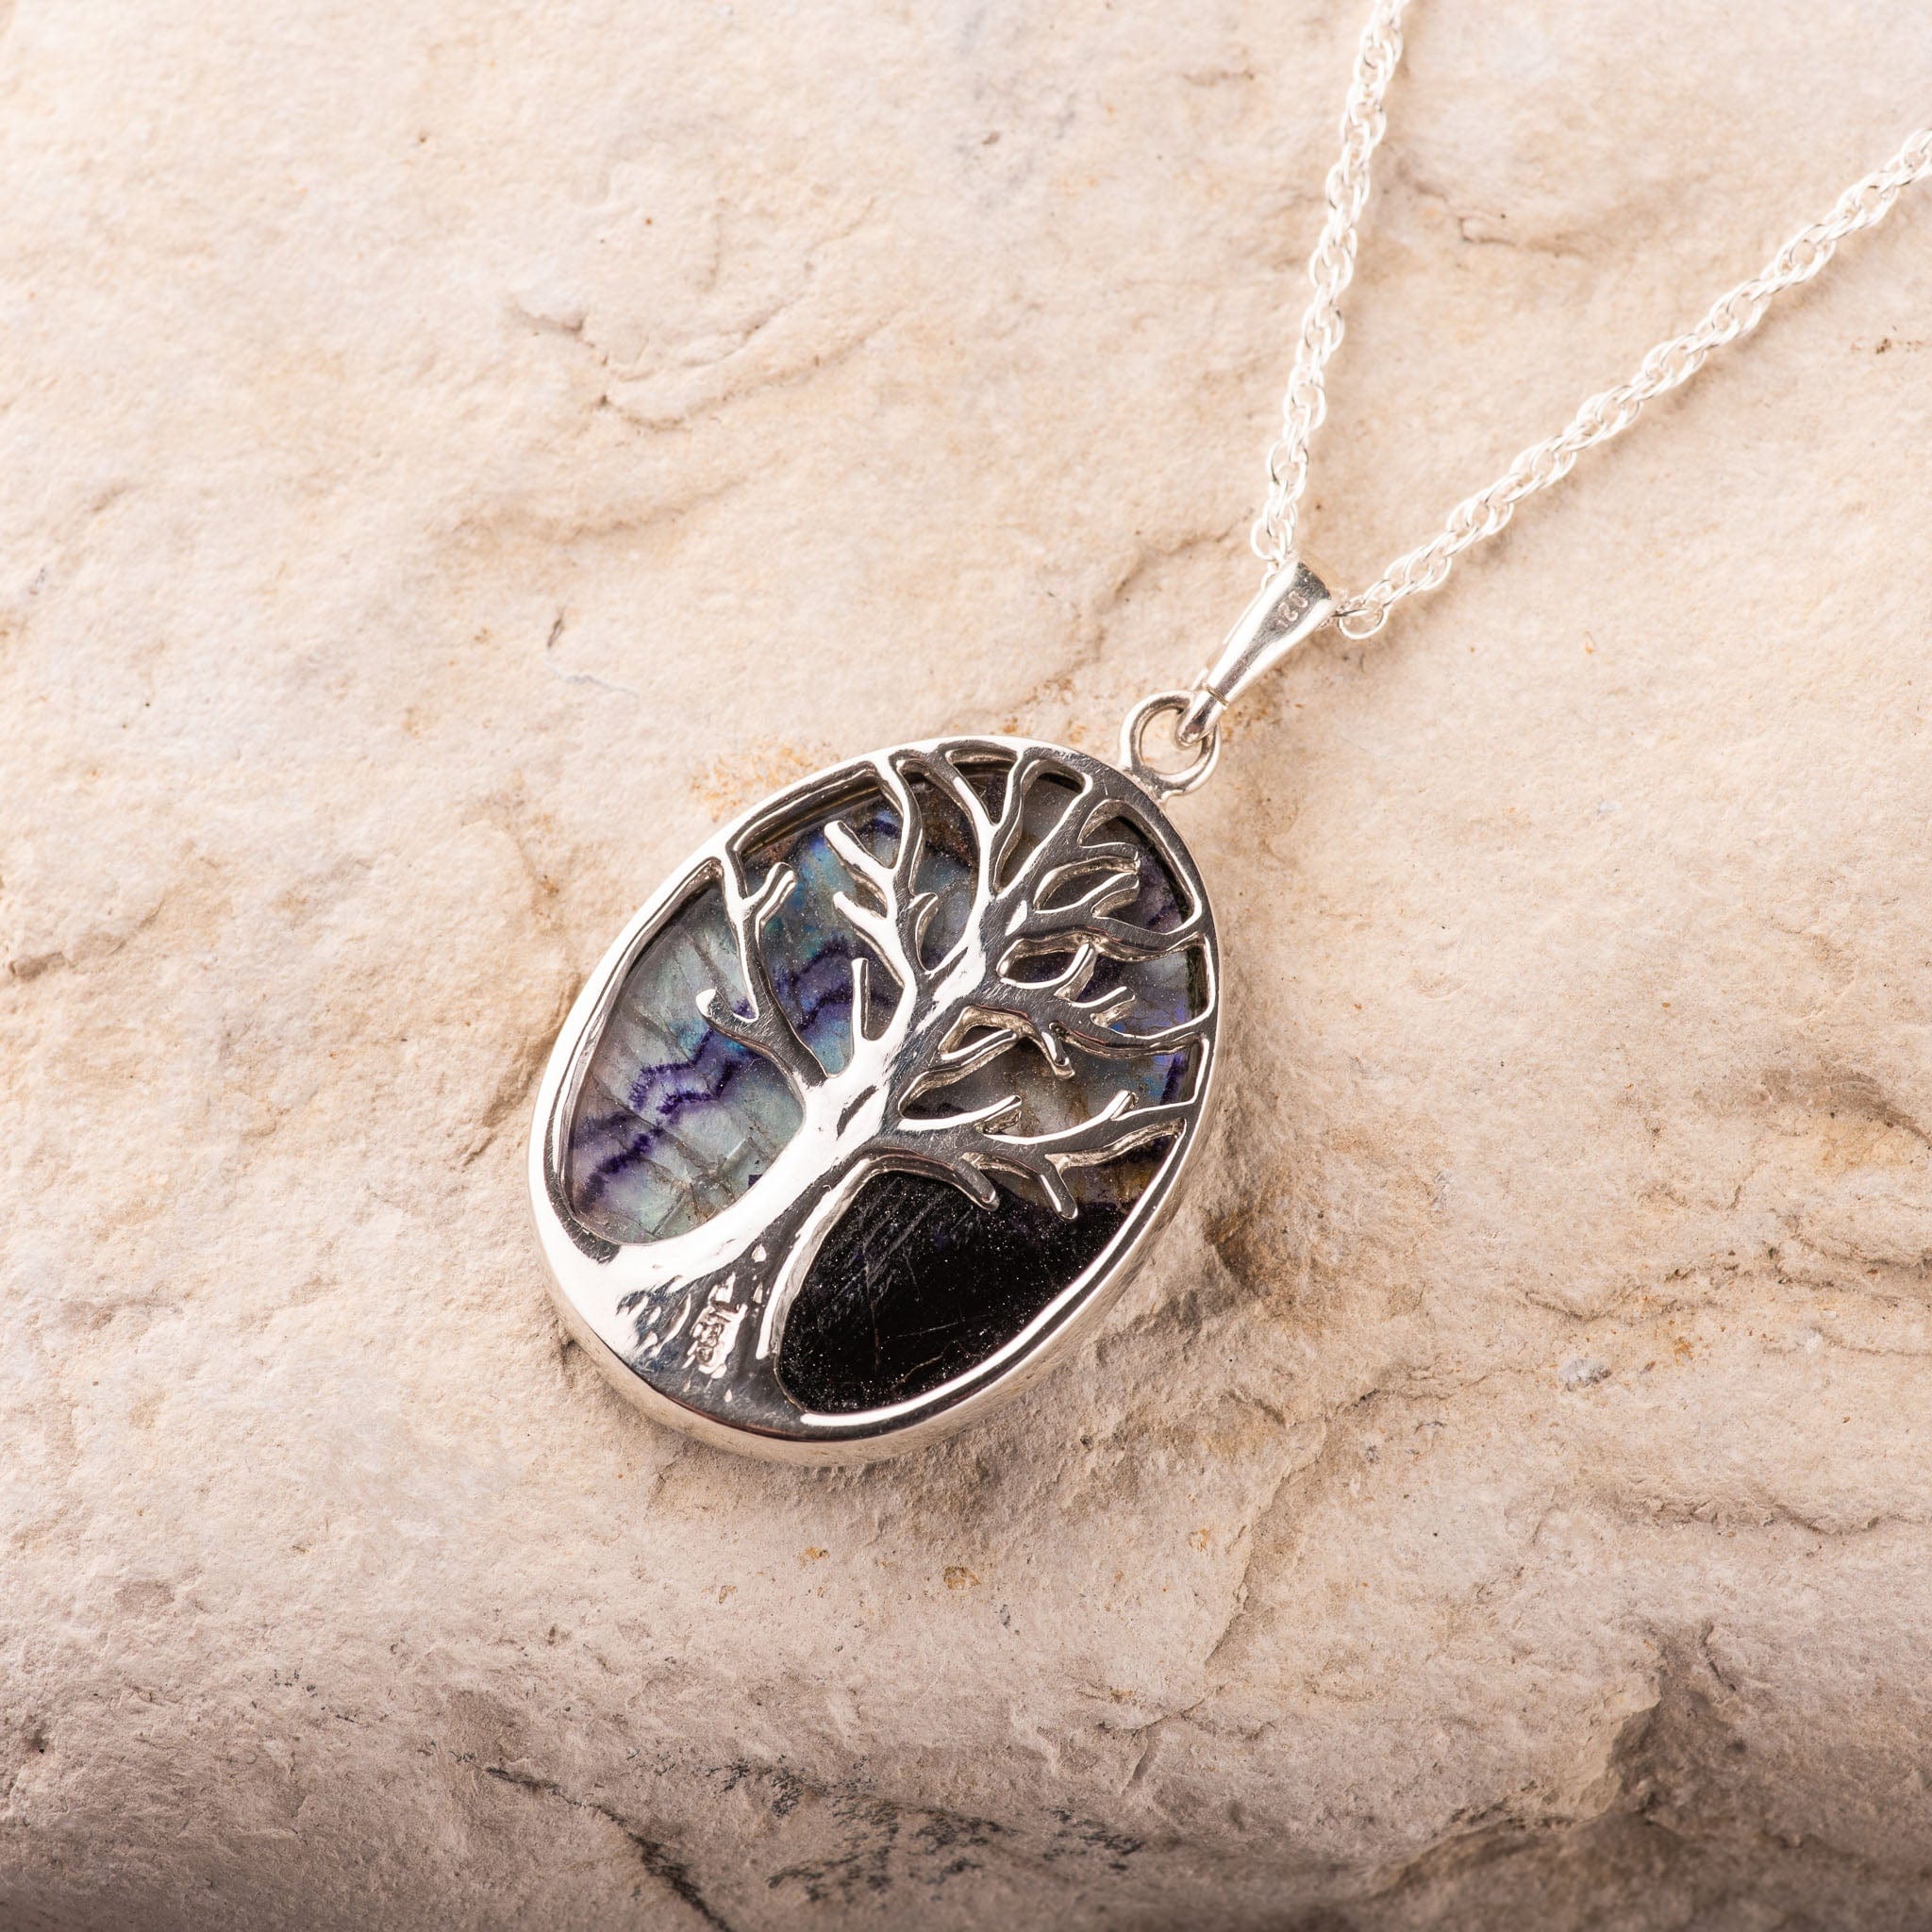 blue john pendant tree of life oval sterling silver bj16 28496274161728